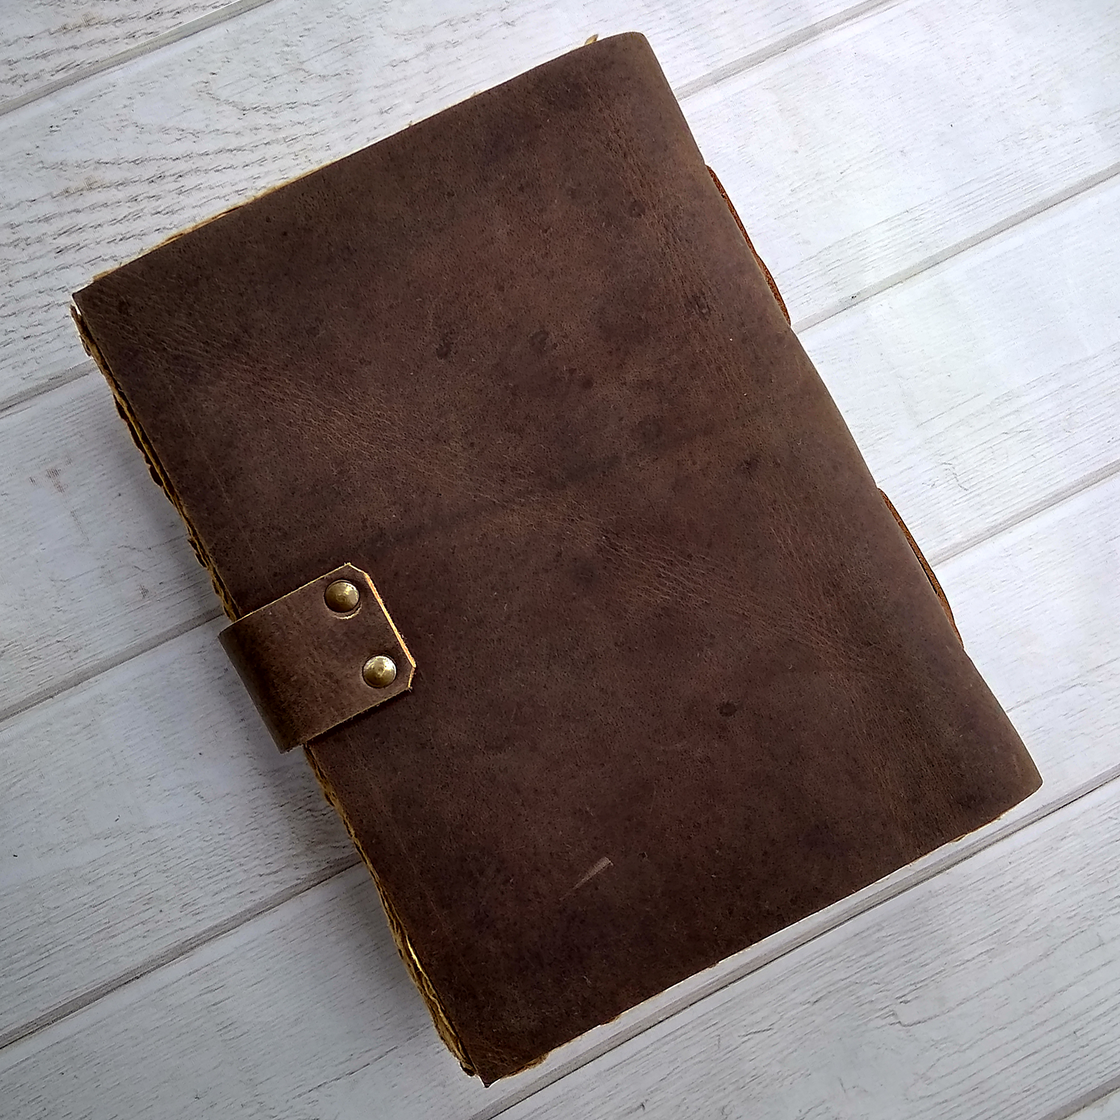 Deckle Edge Paper Vintage Leather Journal